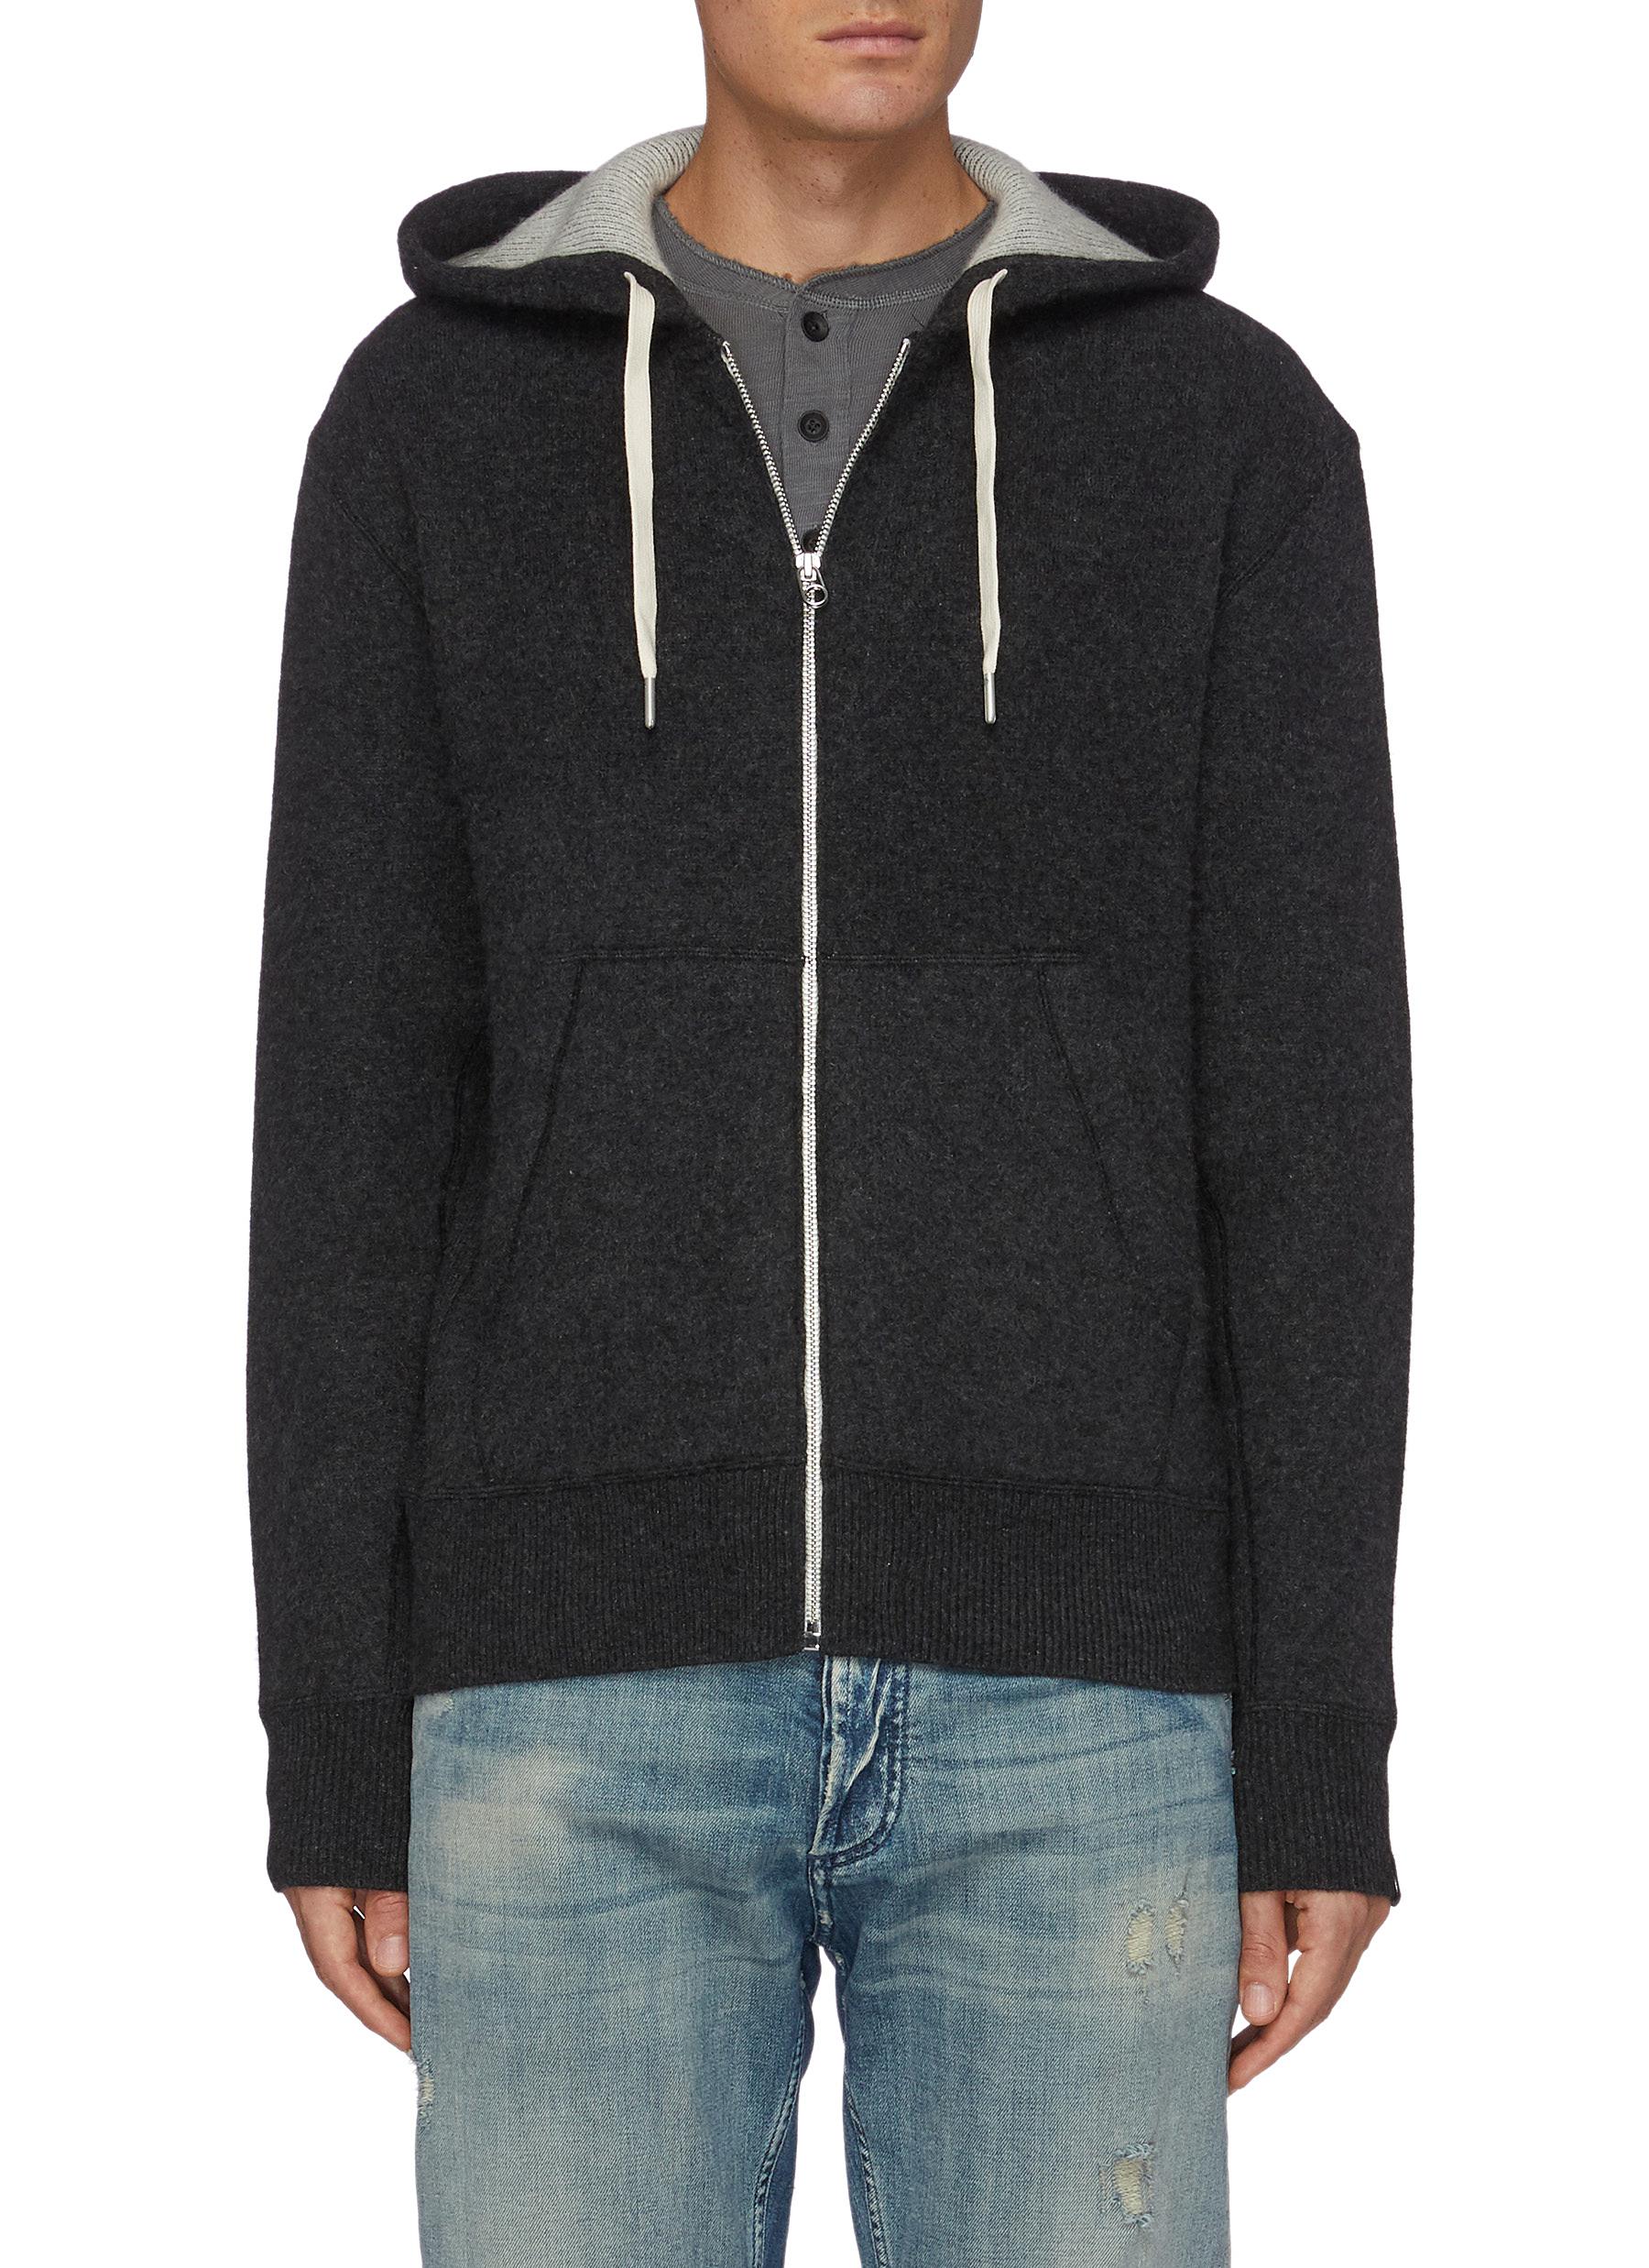 RAG & BONE'Venture' cashmere zip up hoodie | DailyMail